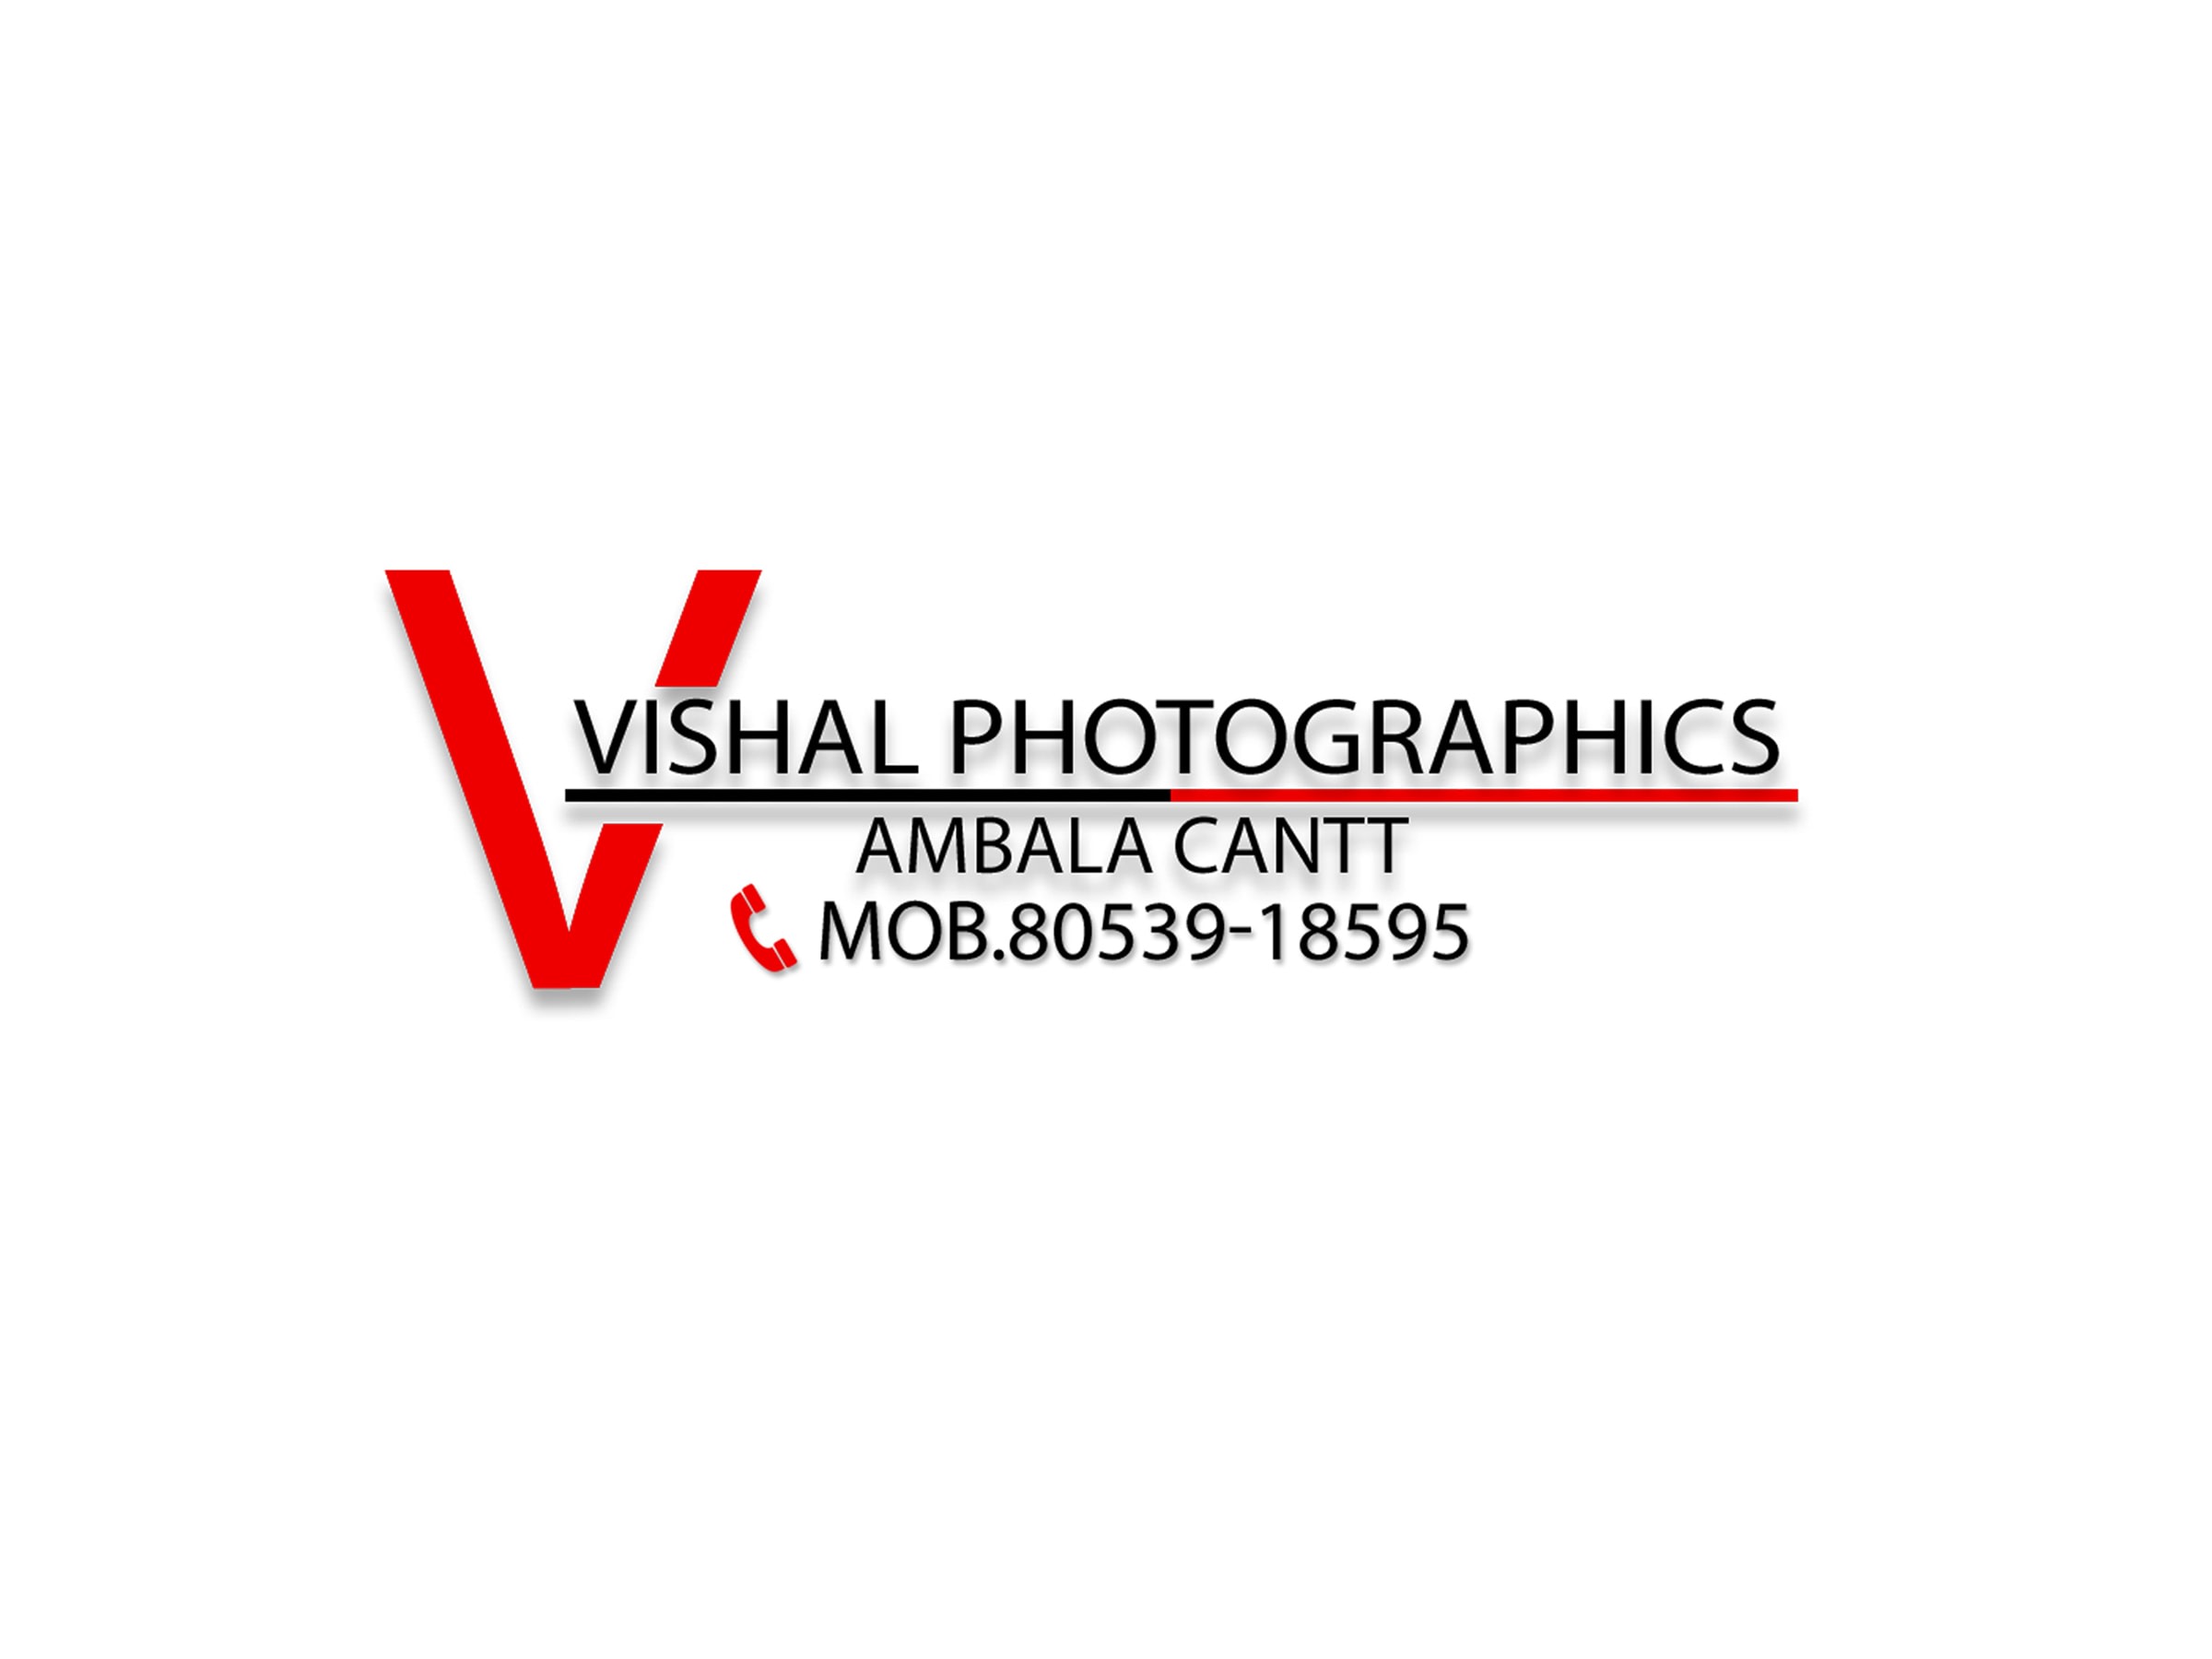 Vishal Photographics